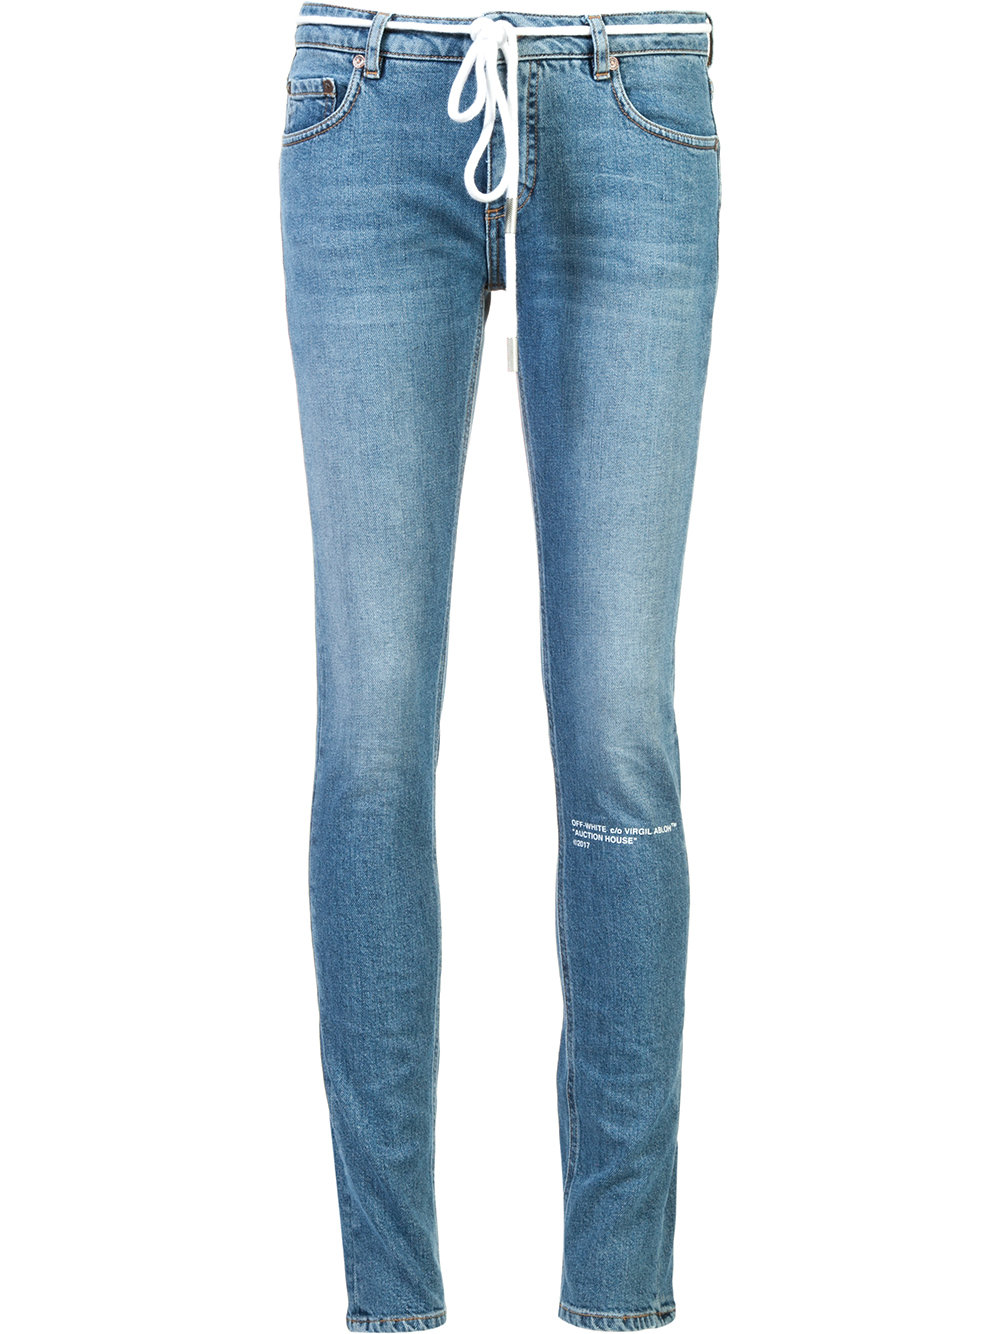 Off-White Auction House rose print jeans DENIM Women Clothing Skinny